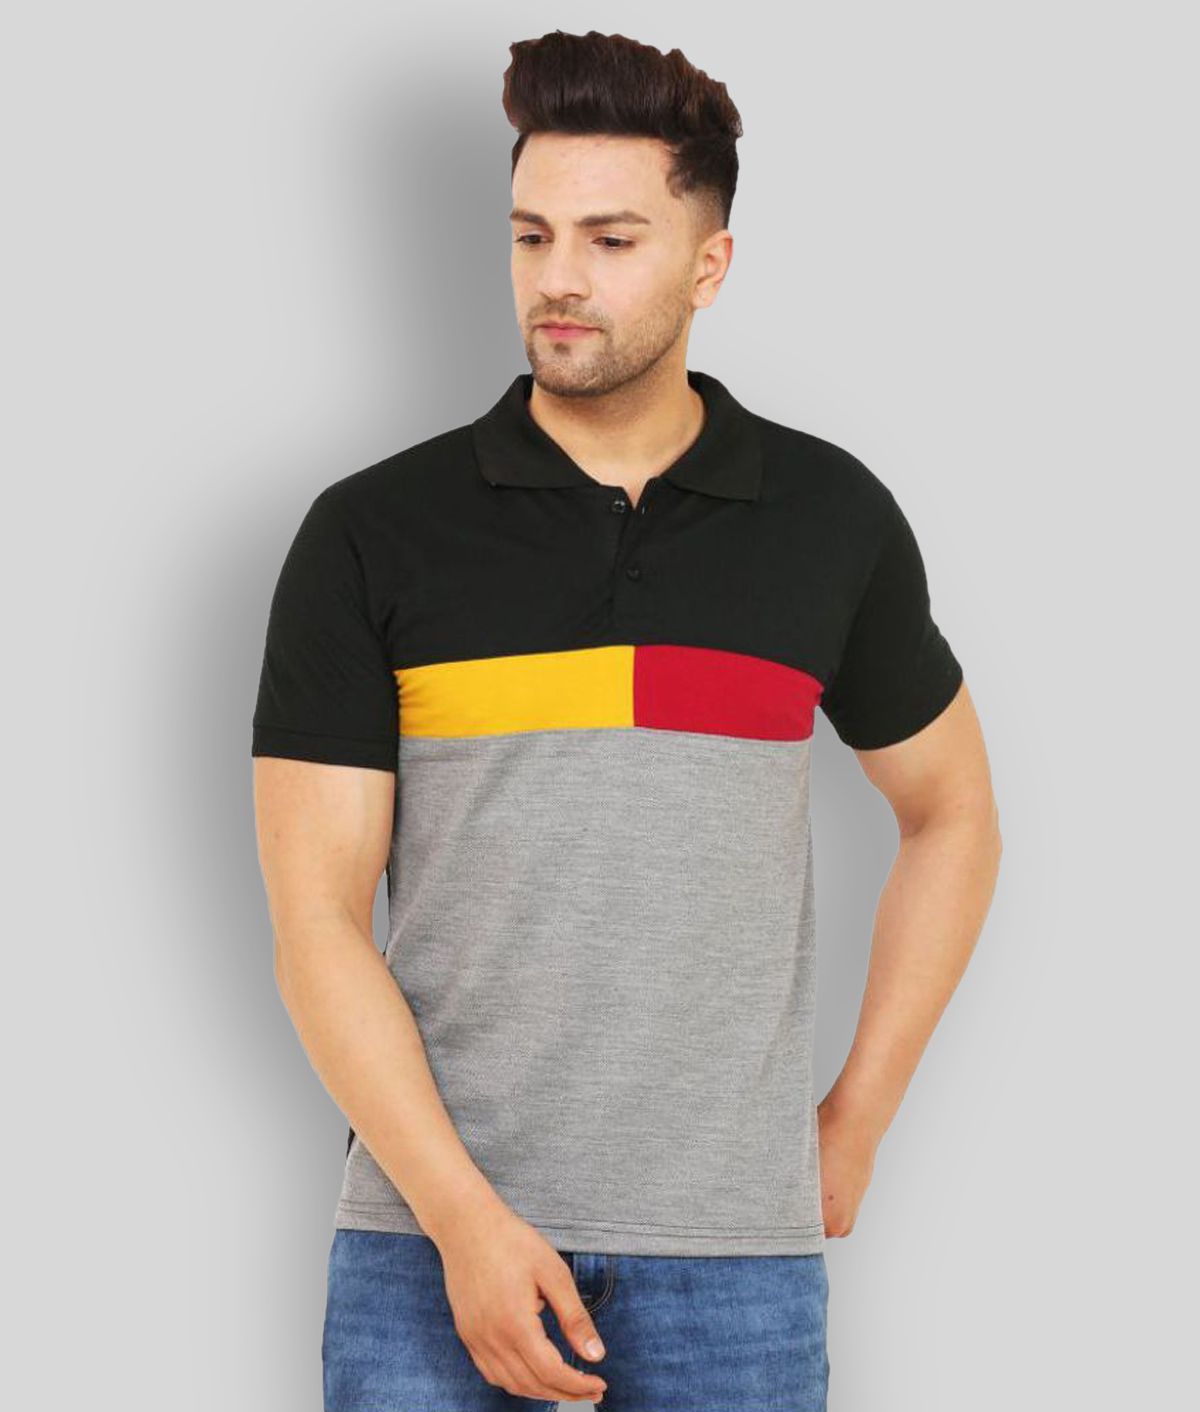     			Leotude - Grey Cotton Blend Regular Fit Men's Polo T Shirt ( Pack of 1 )